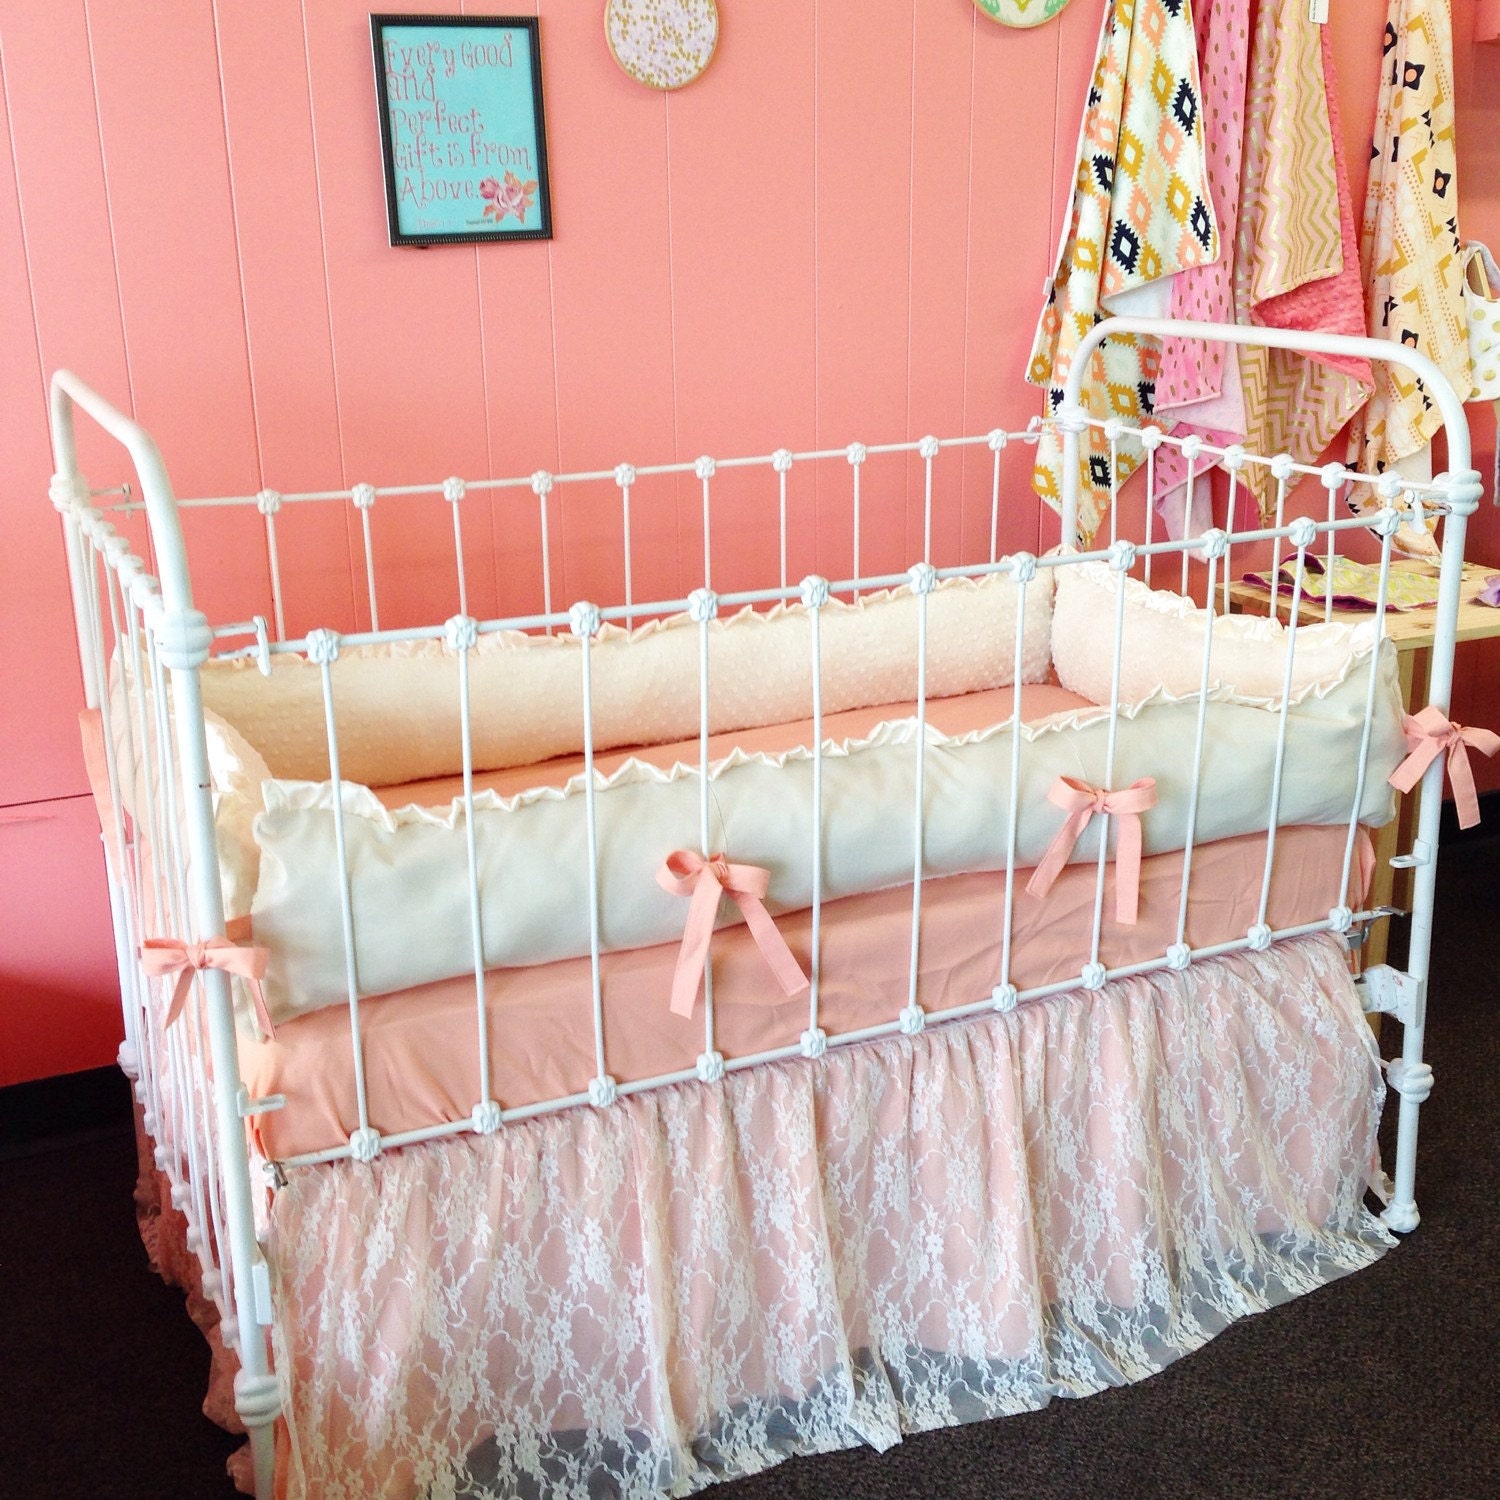 Peaches and Cream Lace Baby Crib Bedding Ruffled Lace Crib